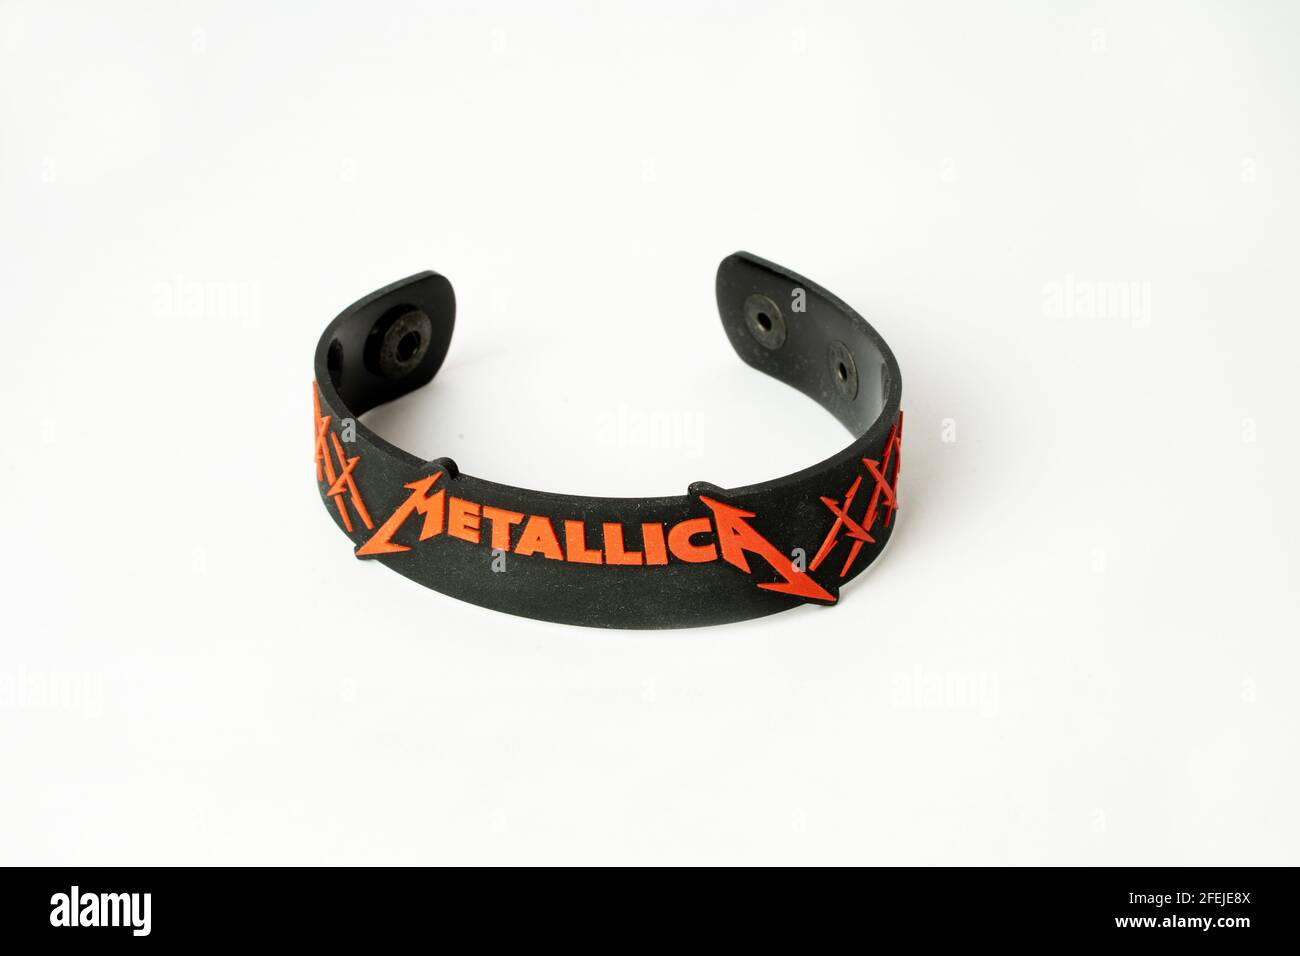 Pulsera Metallica aislada Fotografía de stock - Alamy